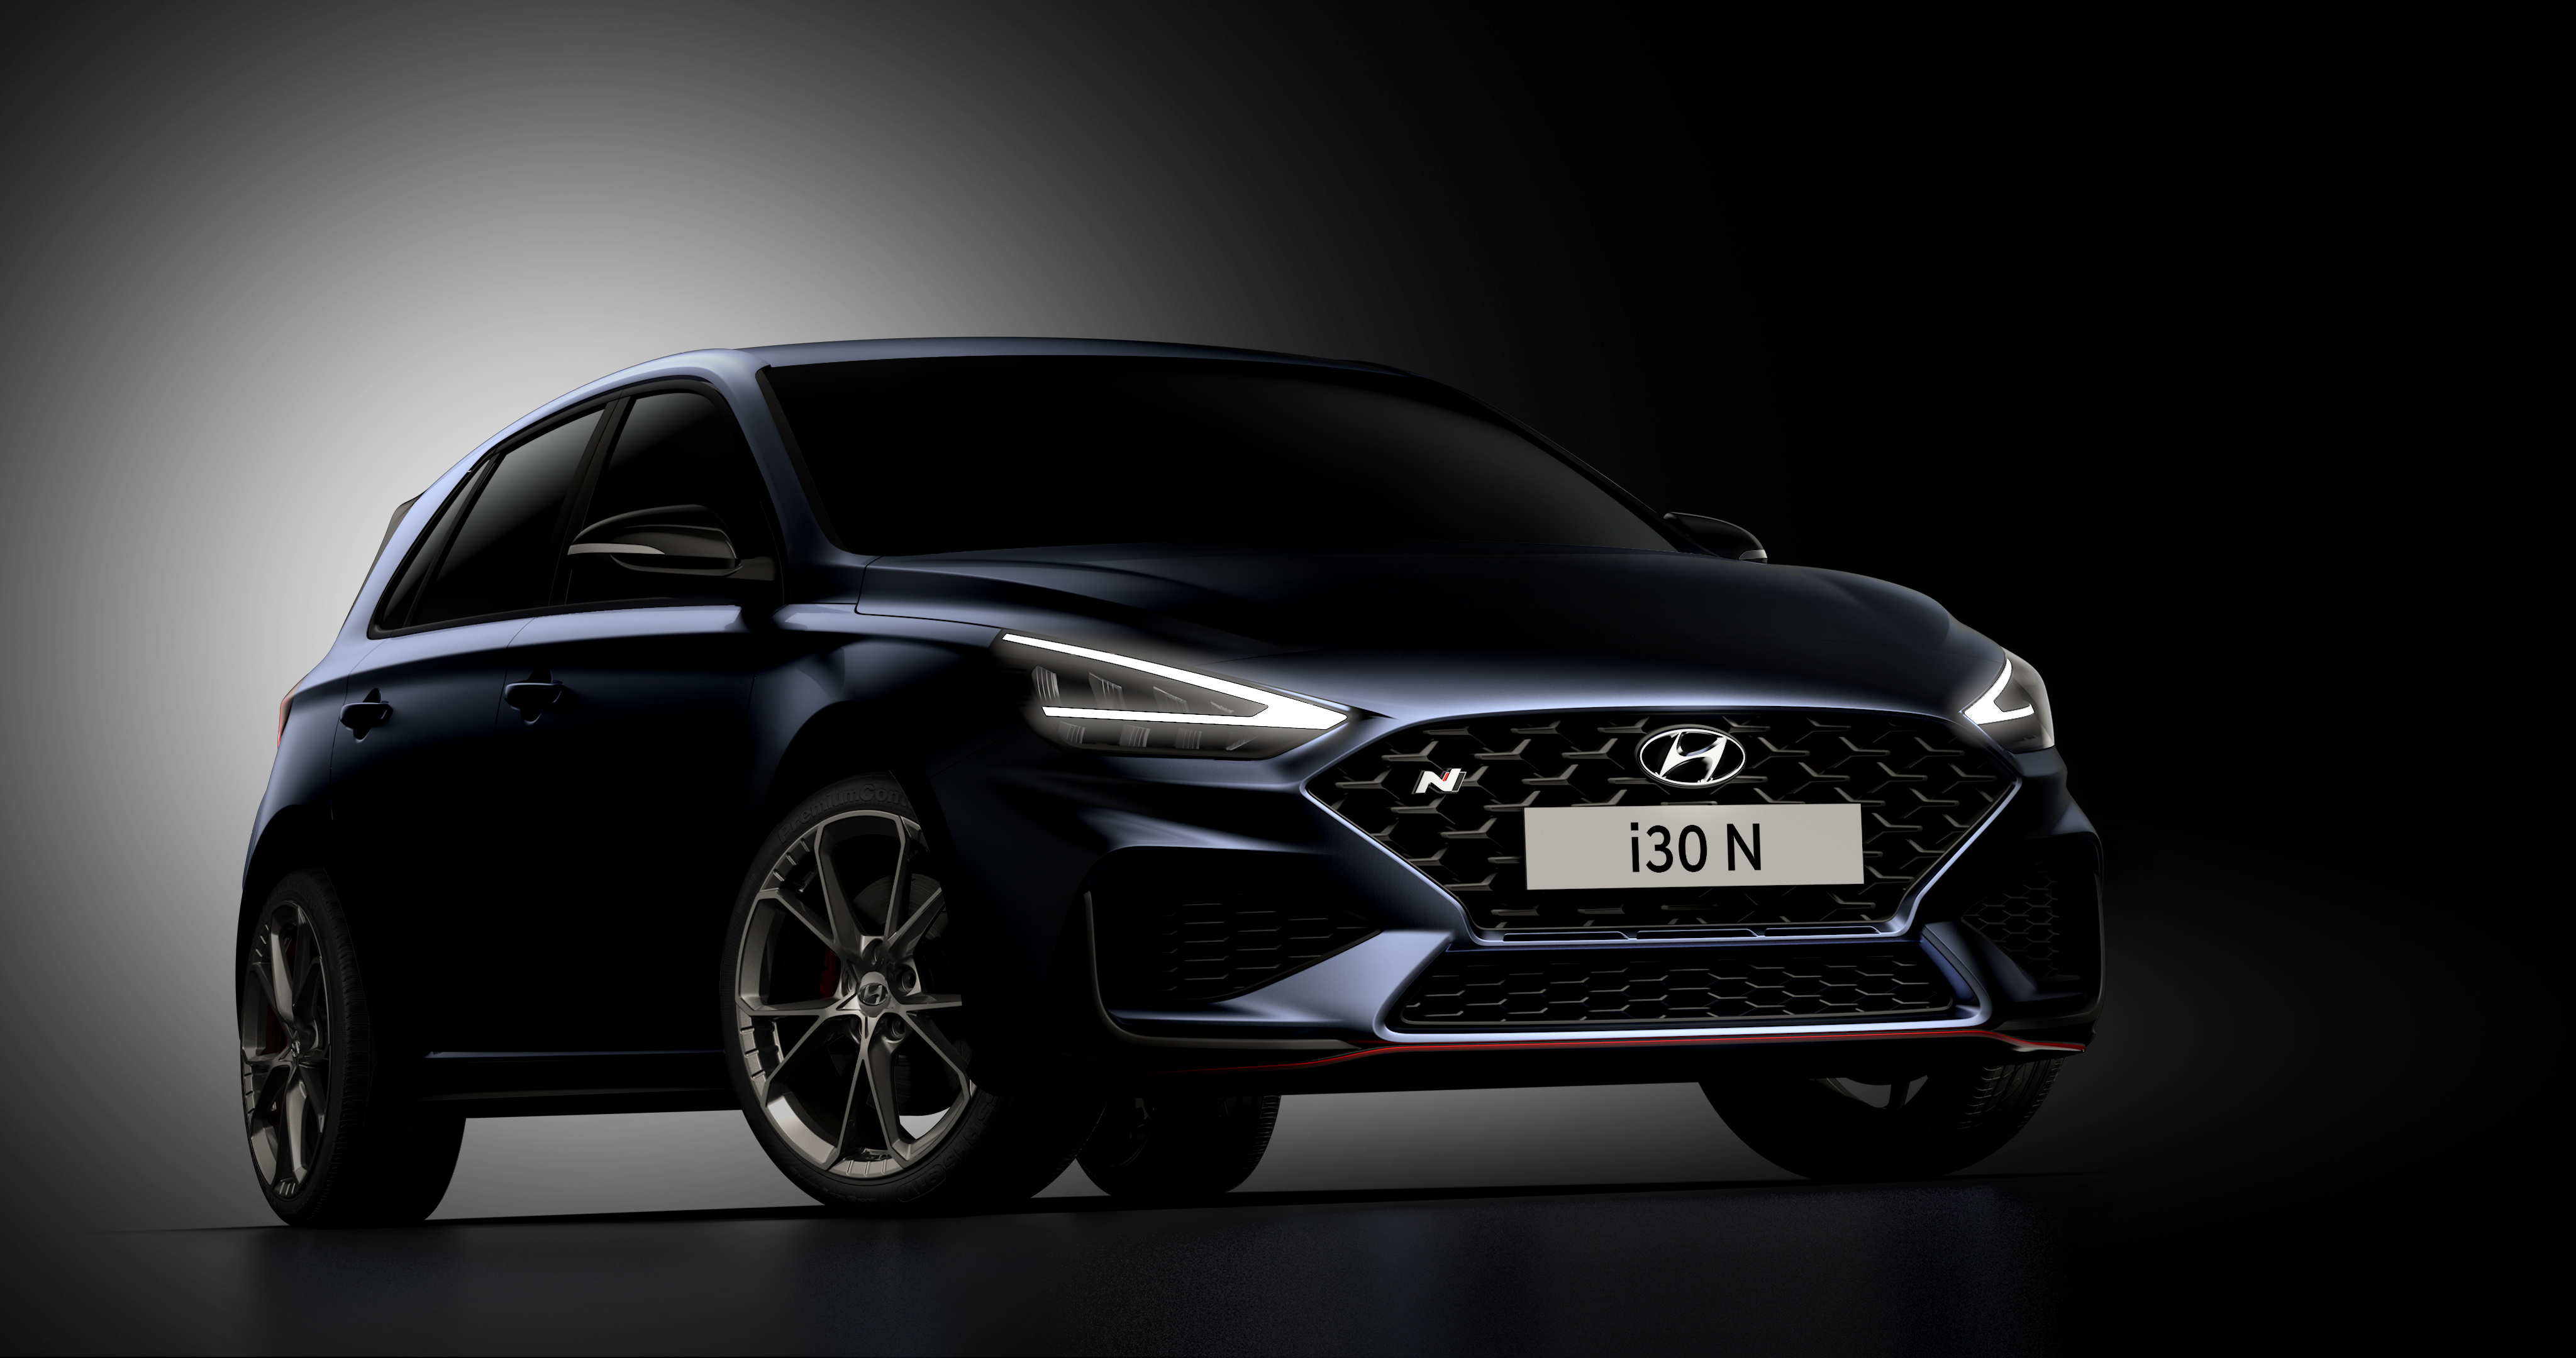 2021 Hyundai i30 N gets new-look design, automatic transmission - Autoblog